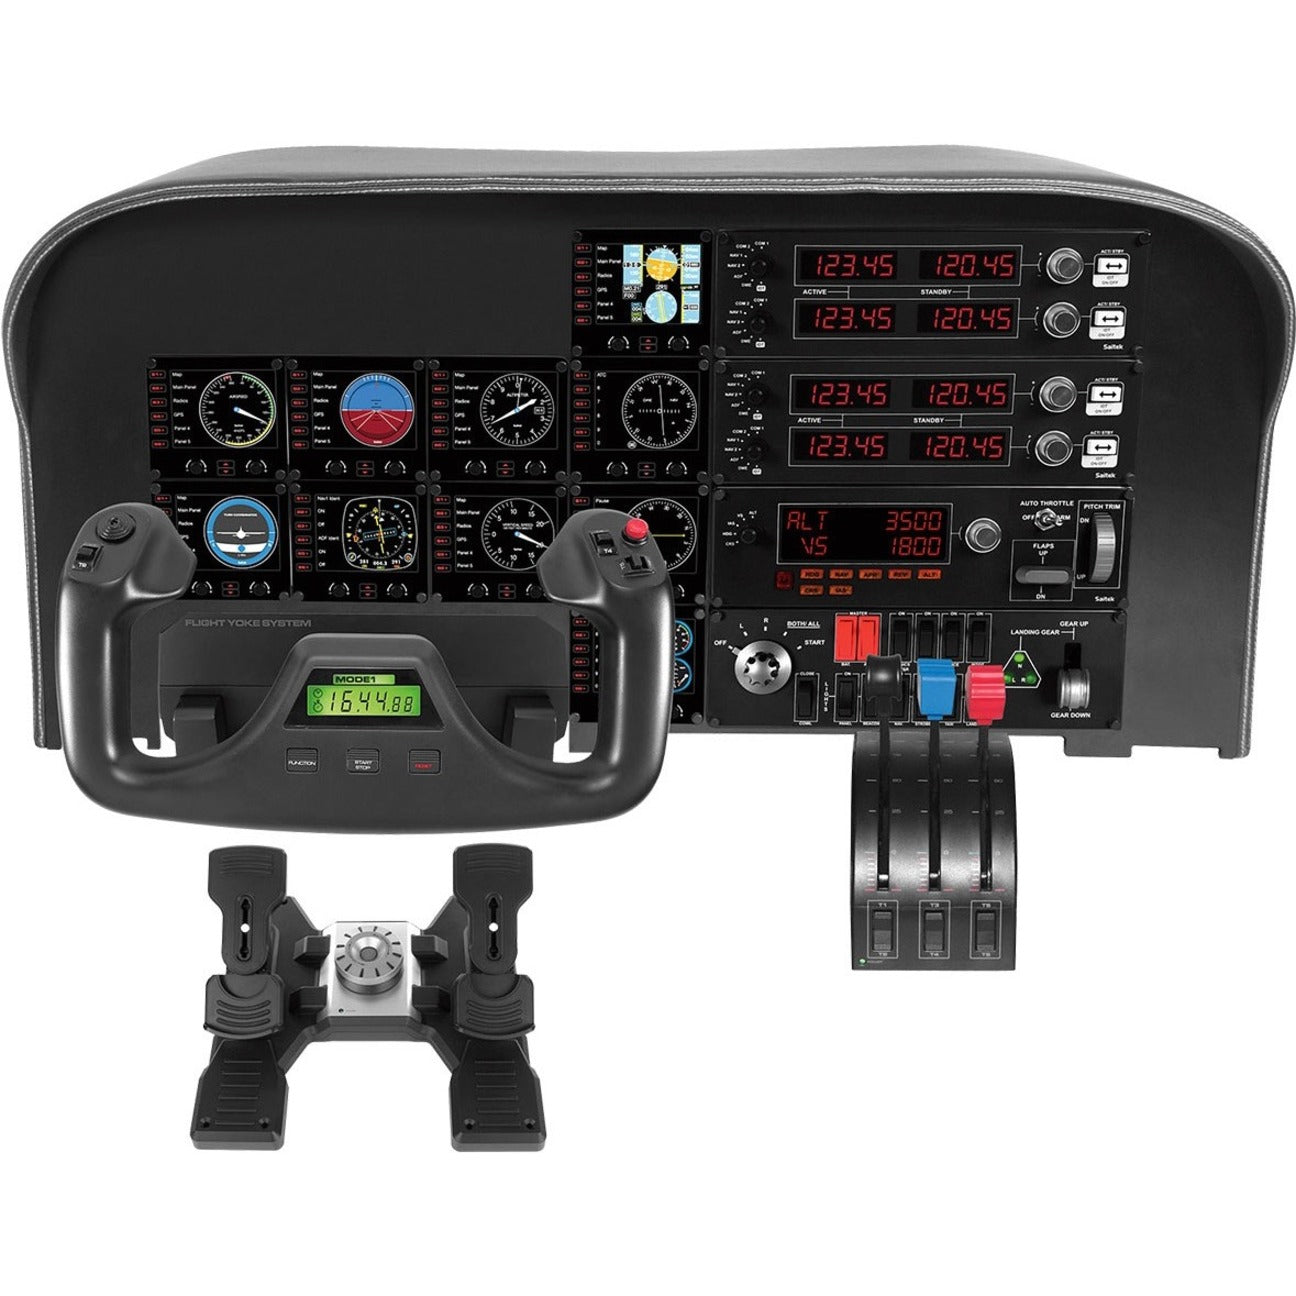 Logitech 945-000029 Saitek Pro Flight Radio Panel, Professional Simulation Radio Controller